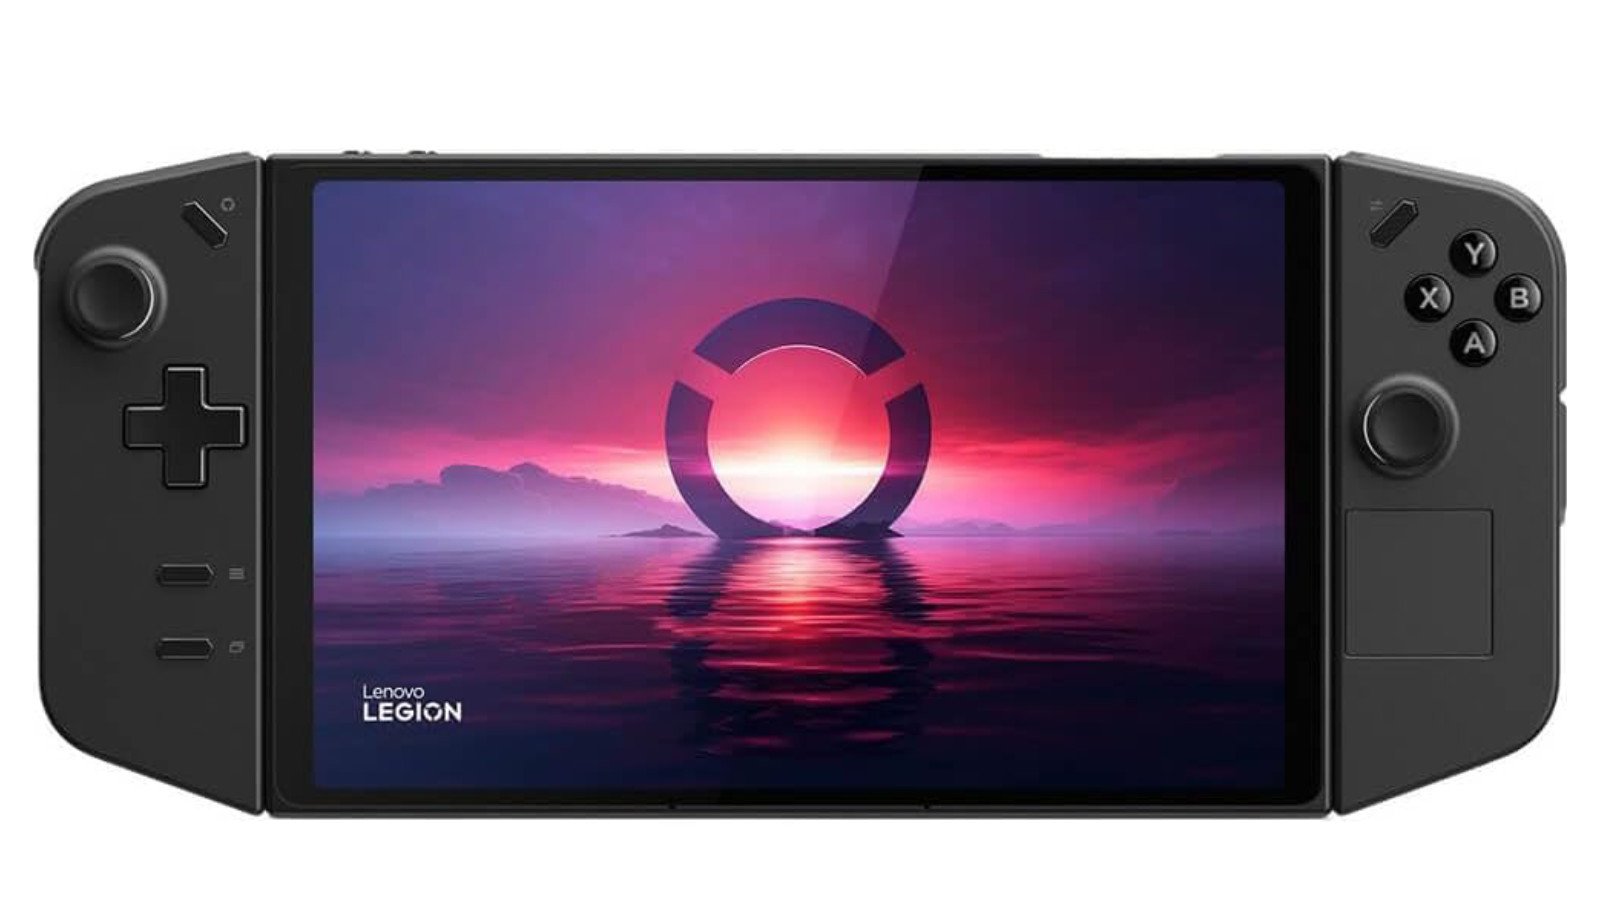 Lenovo Legion Go product image against a white background.